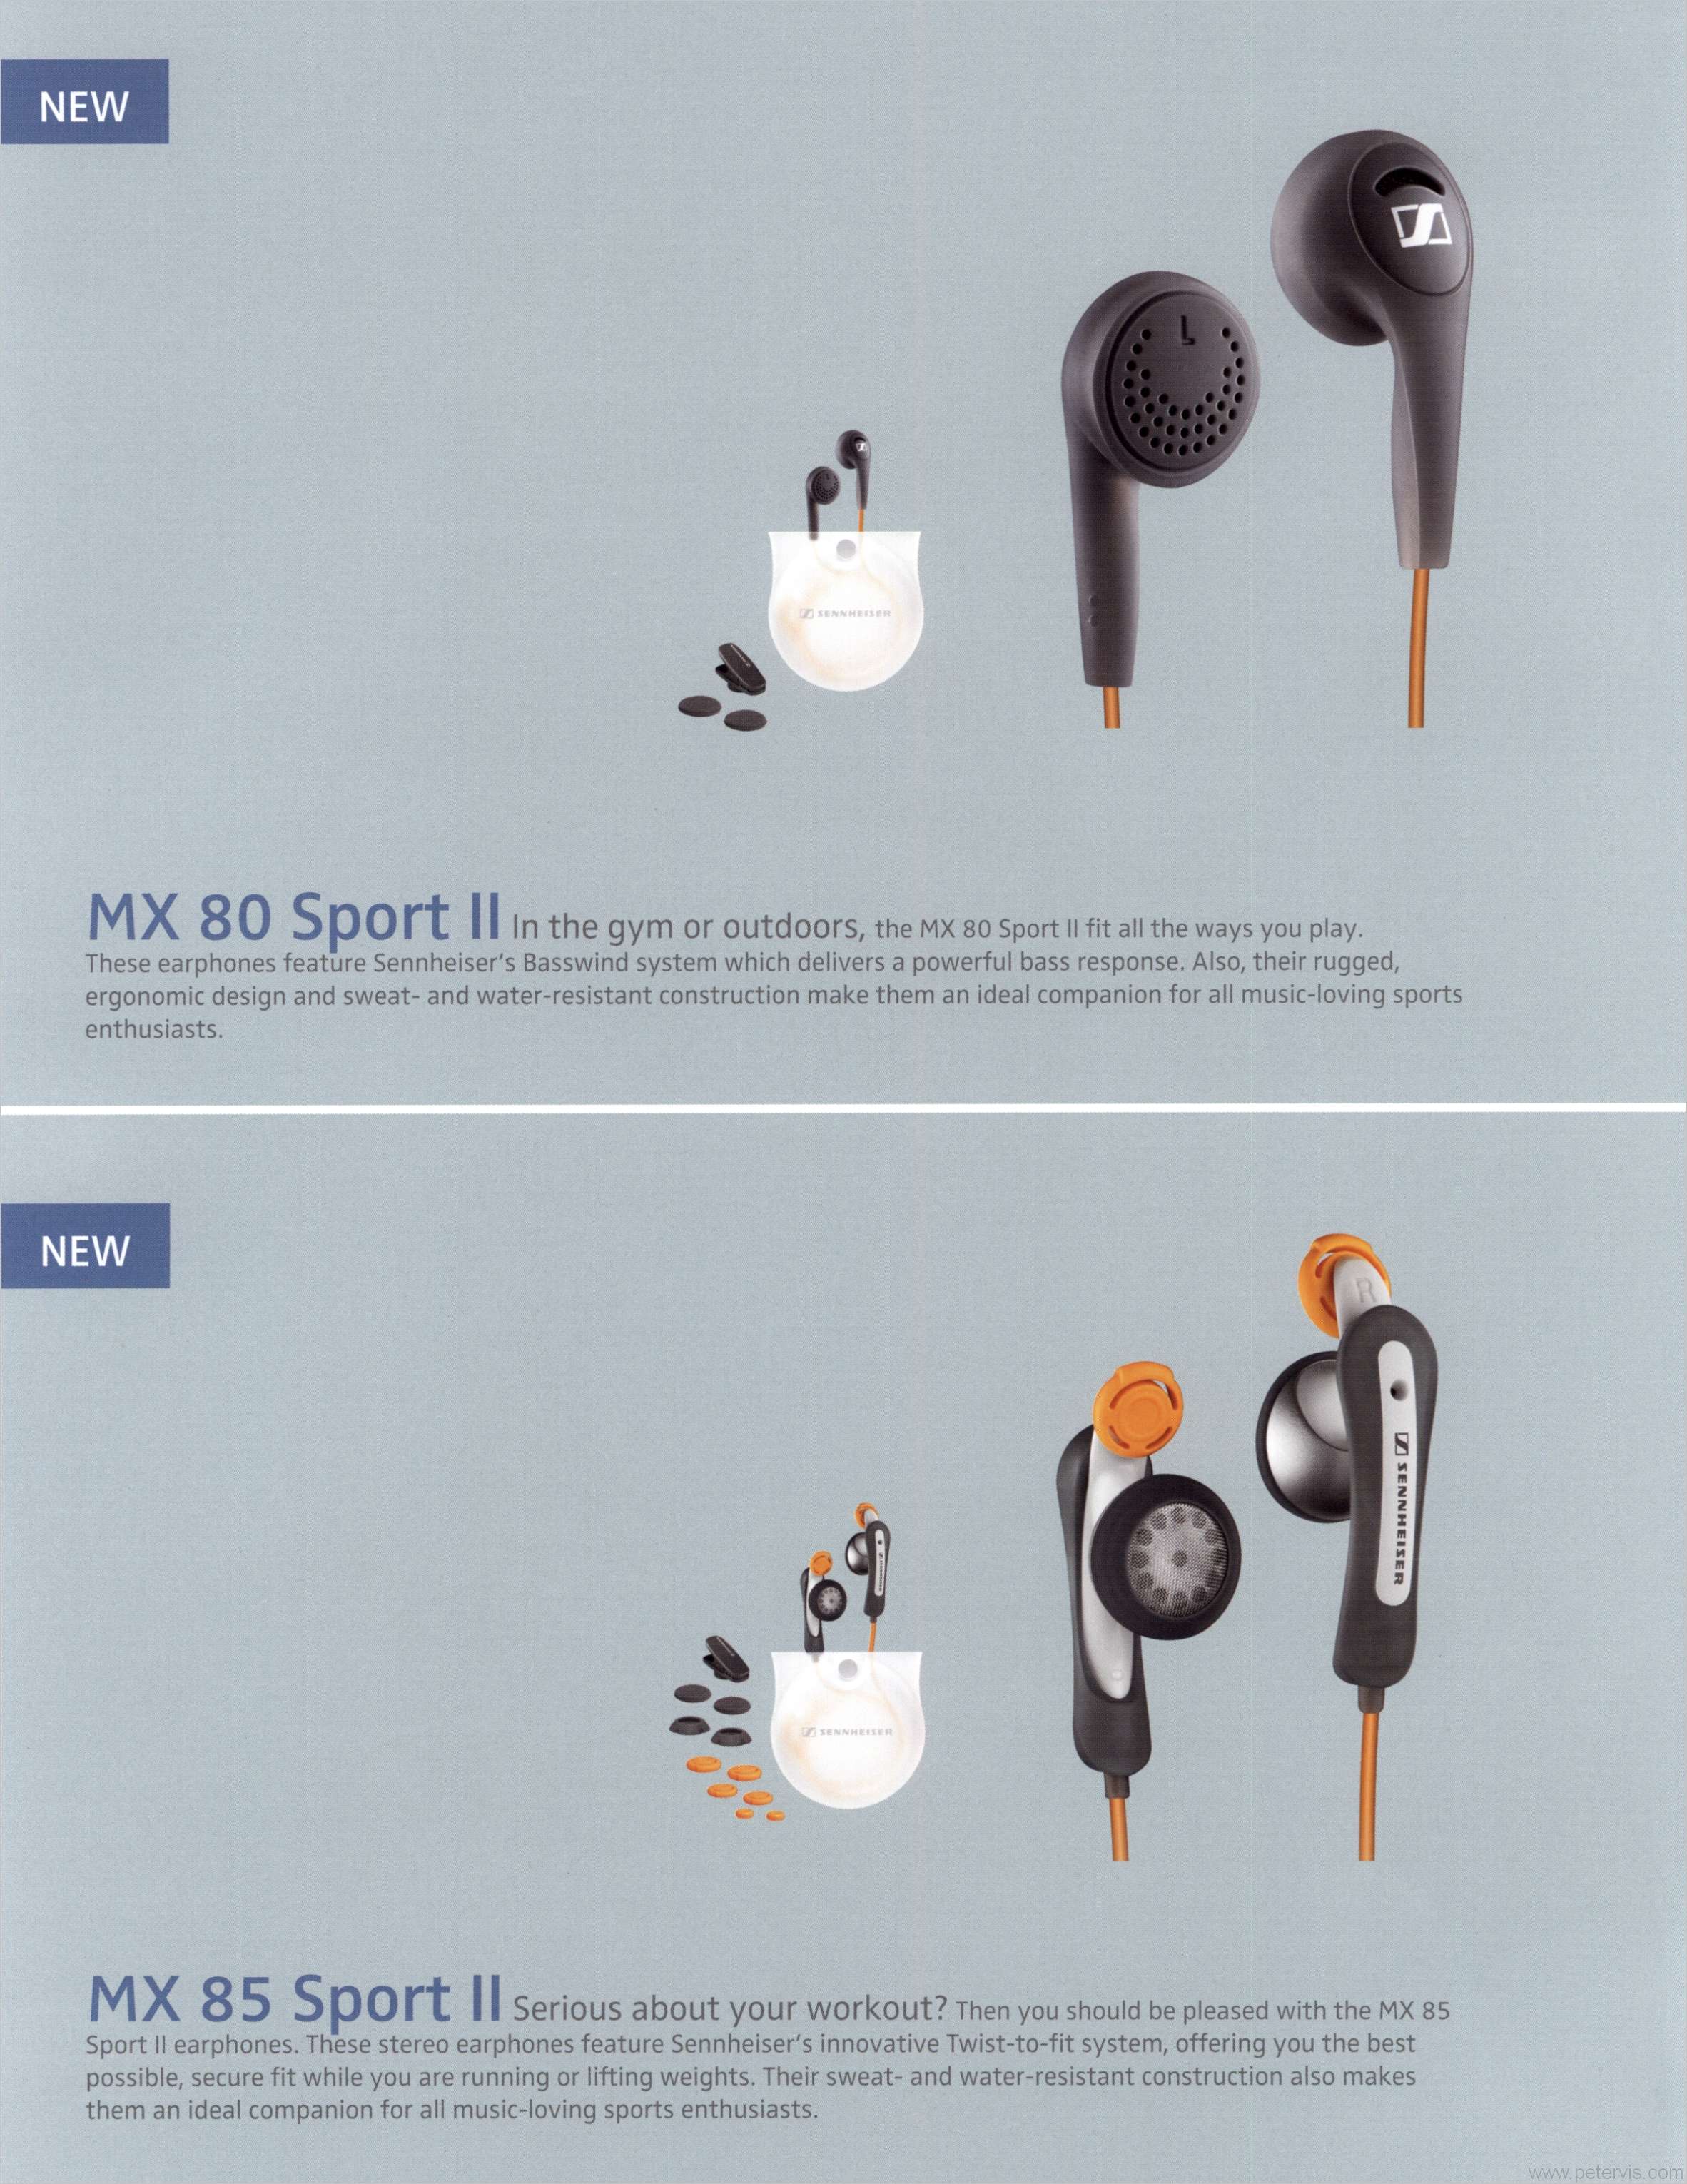 MX 80 SPORT II AND MX 85 SPORT II